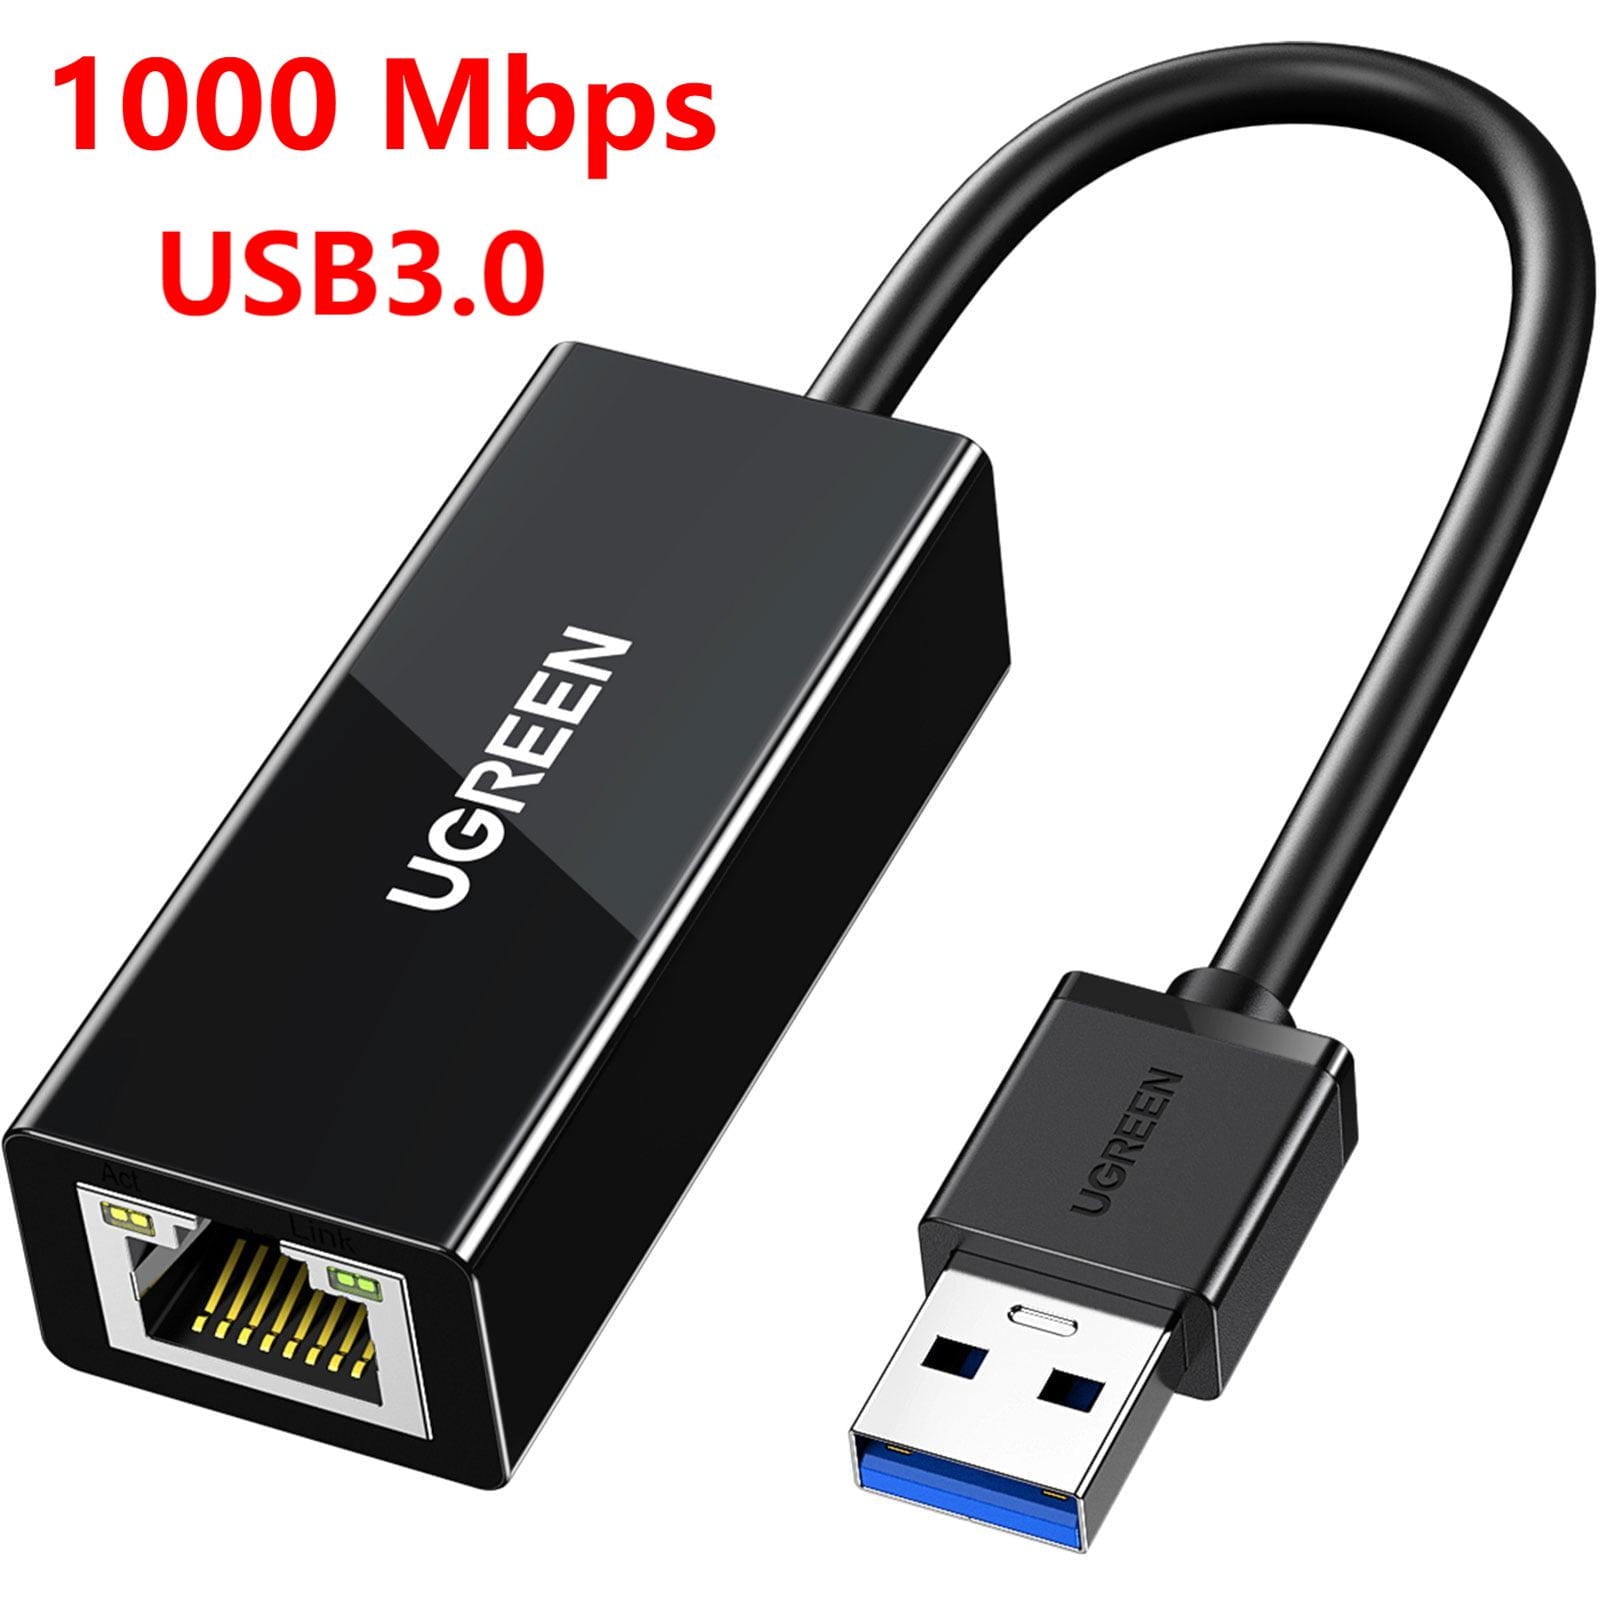 Surface USB 3.0 Gigabit Ethernet Adaptor – Microsoft Store